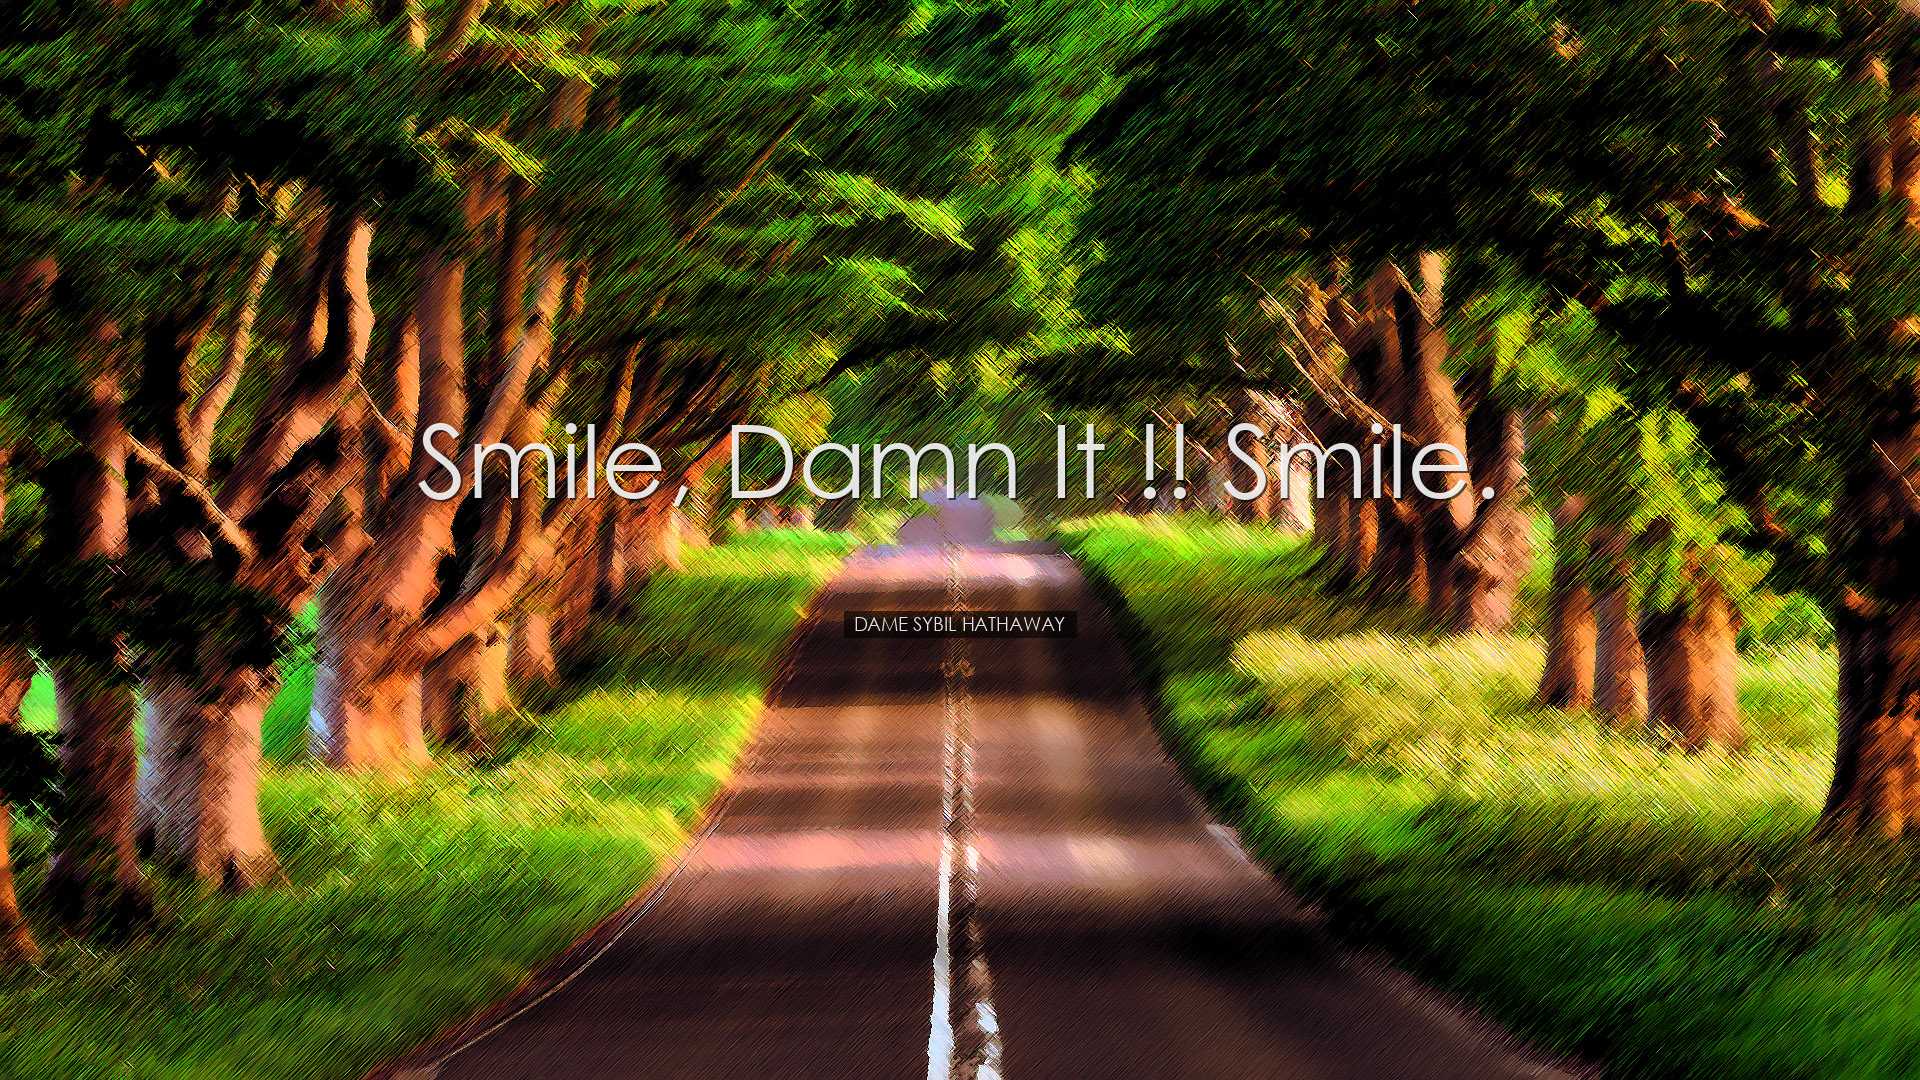 Smile, damn it !! Smile. - Dame Sybil Hathaway